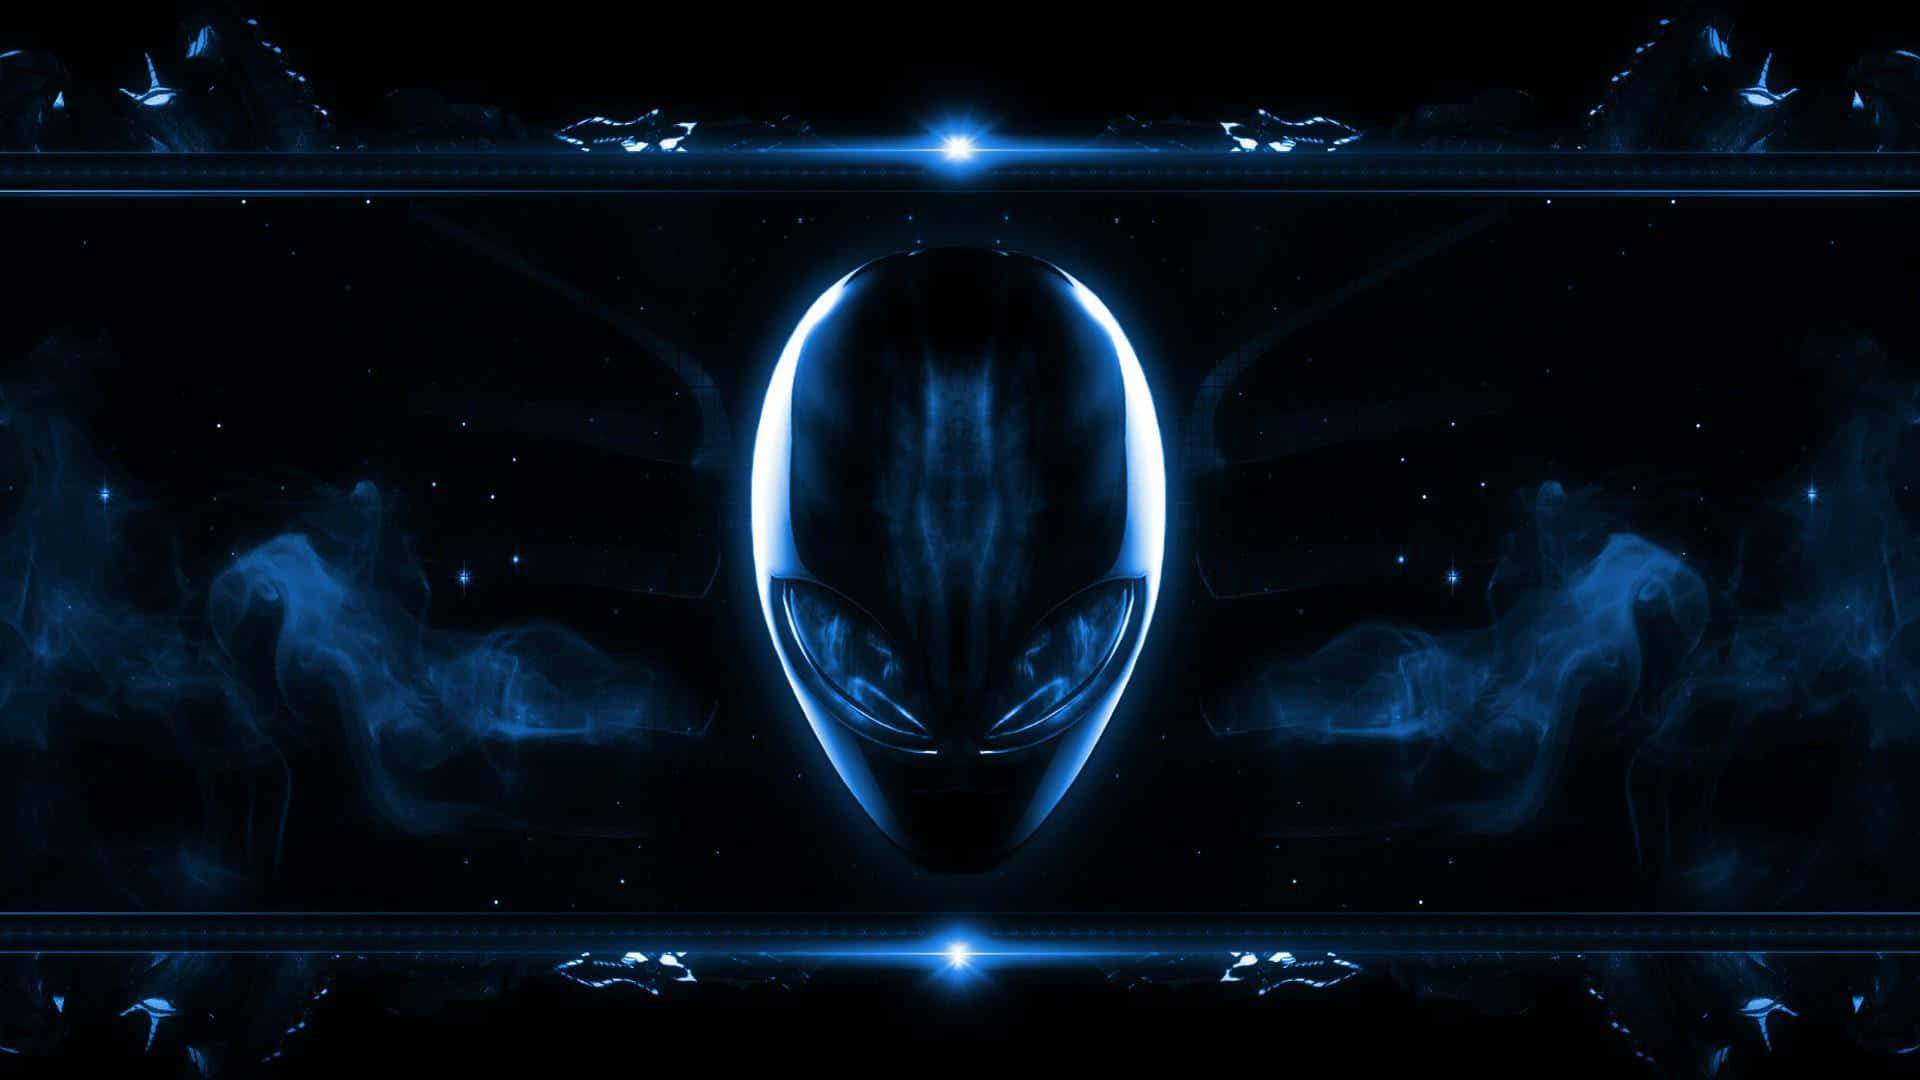 Alien Abduction - Mysterious Space Encounter